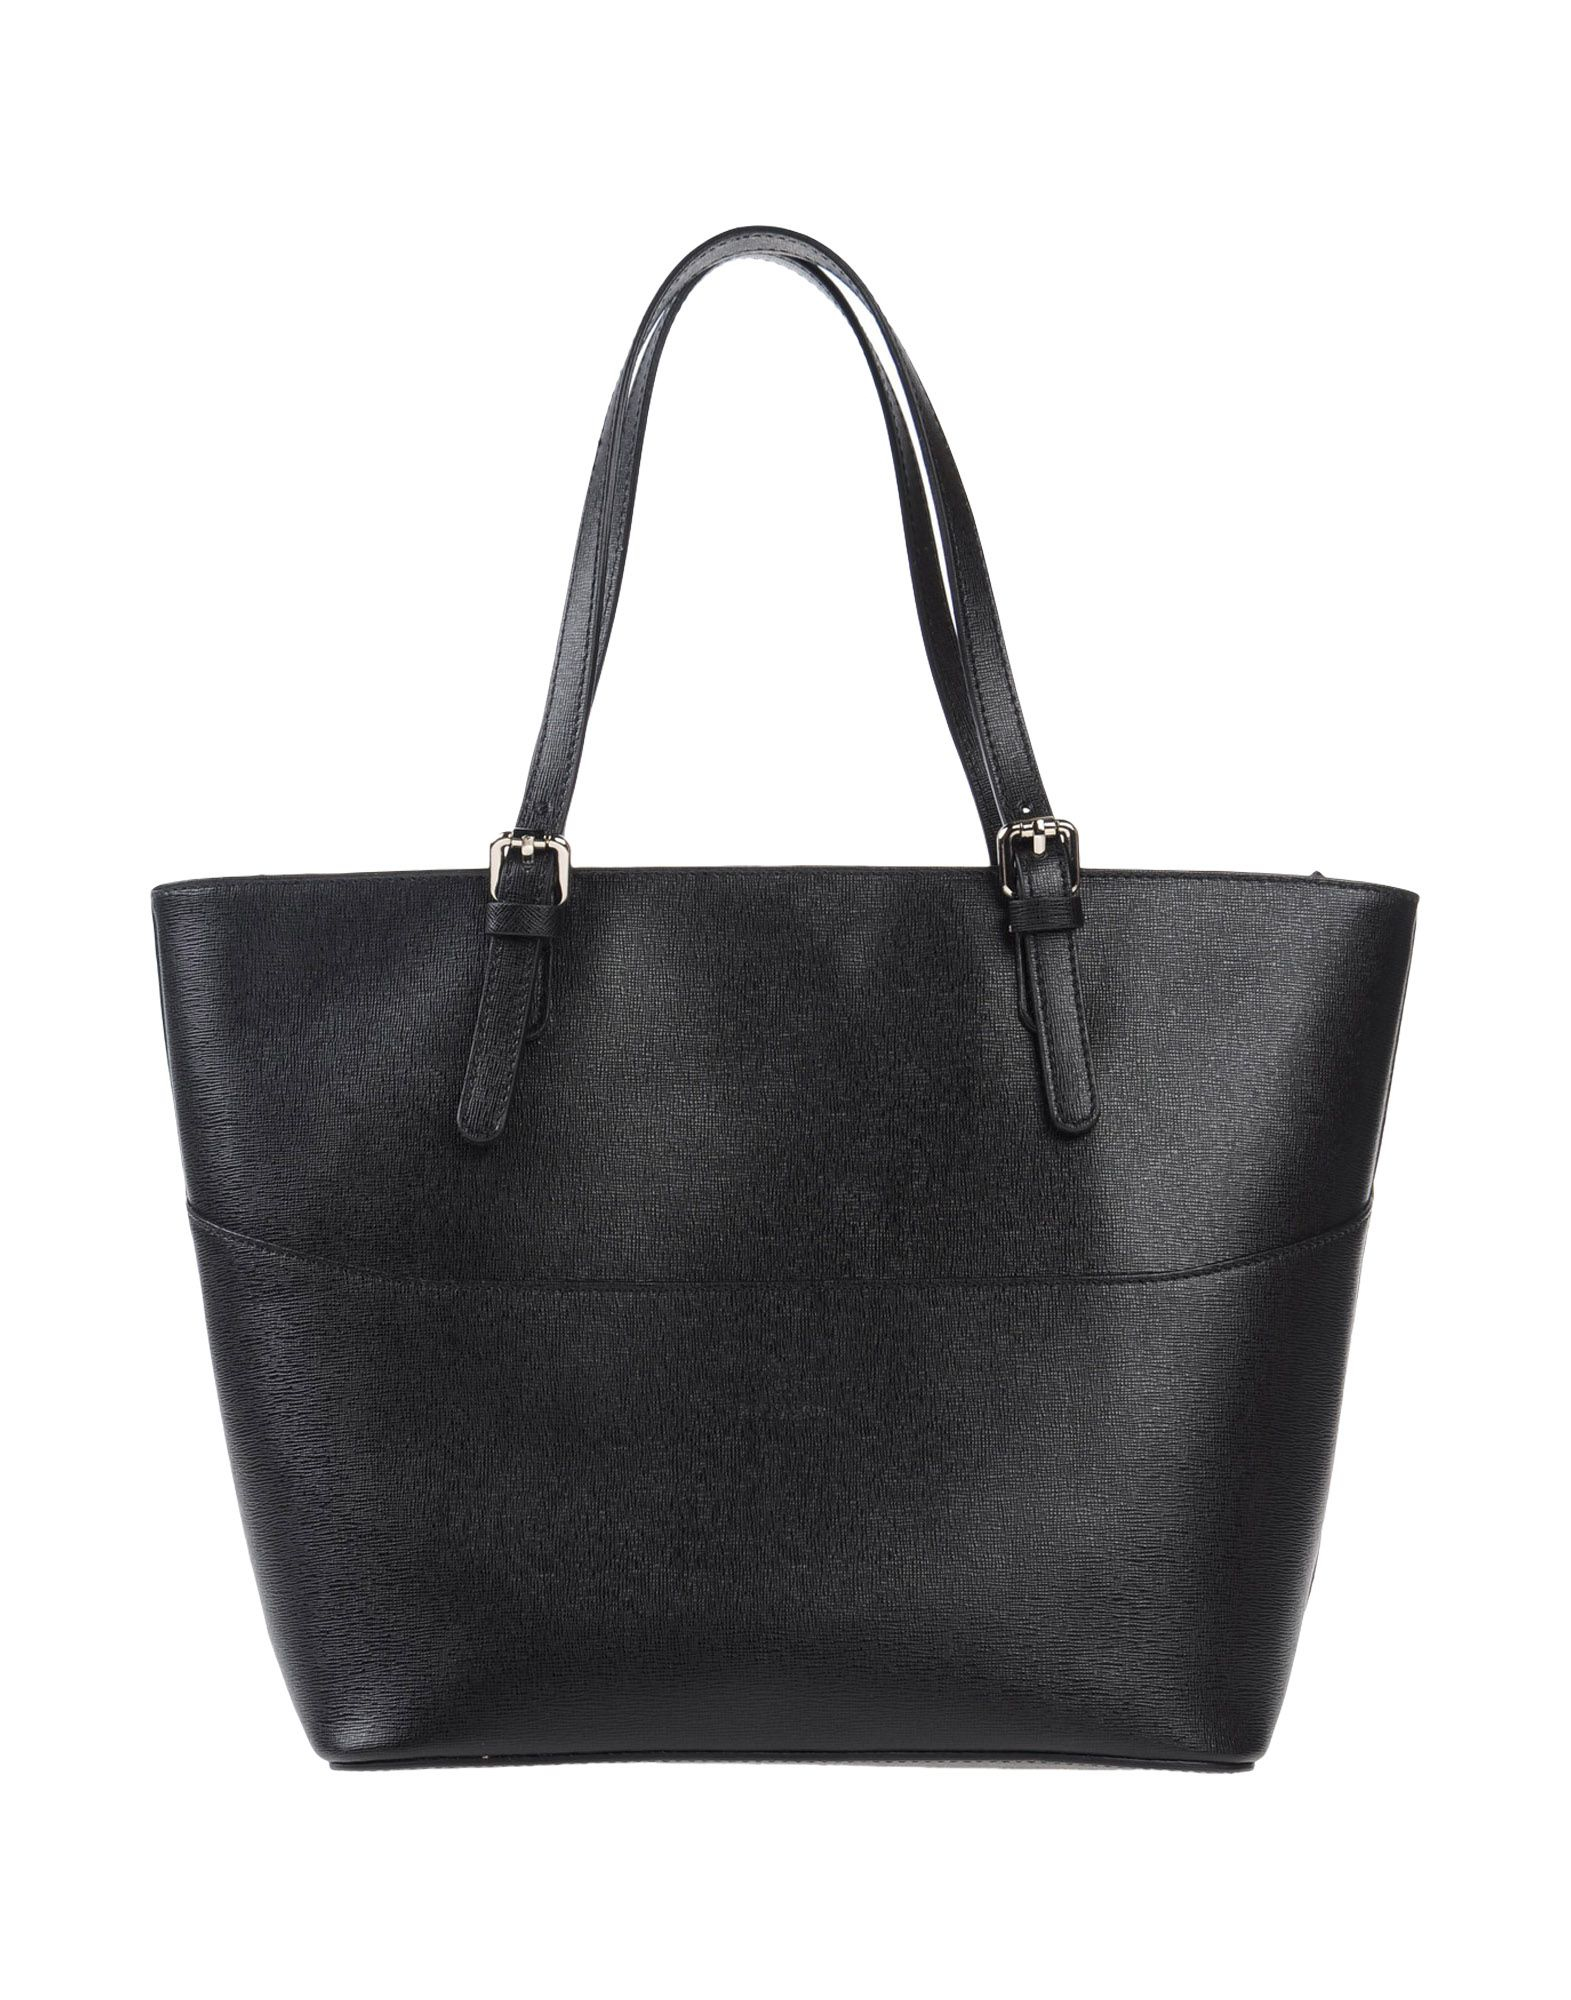 Desmo Leather Handbag in Black - Lyst